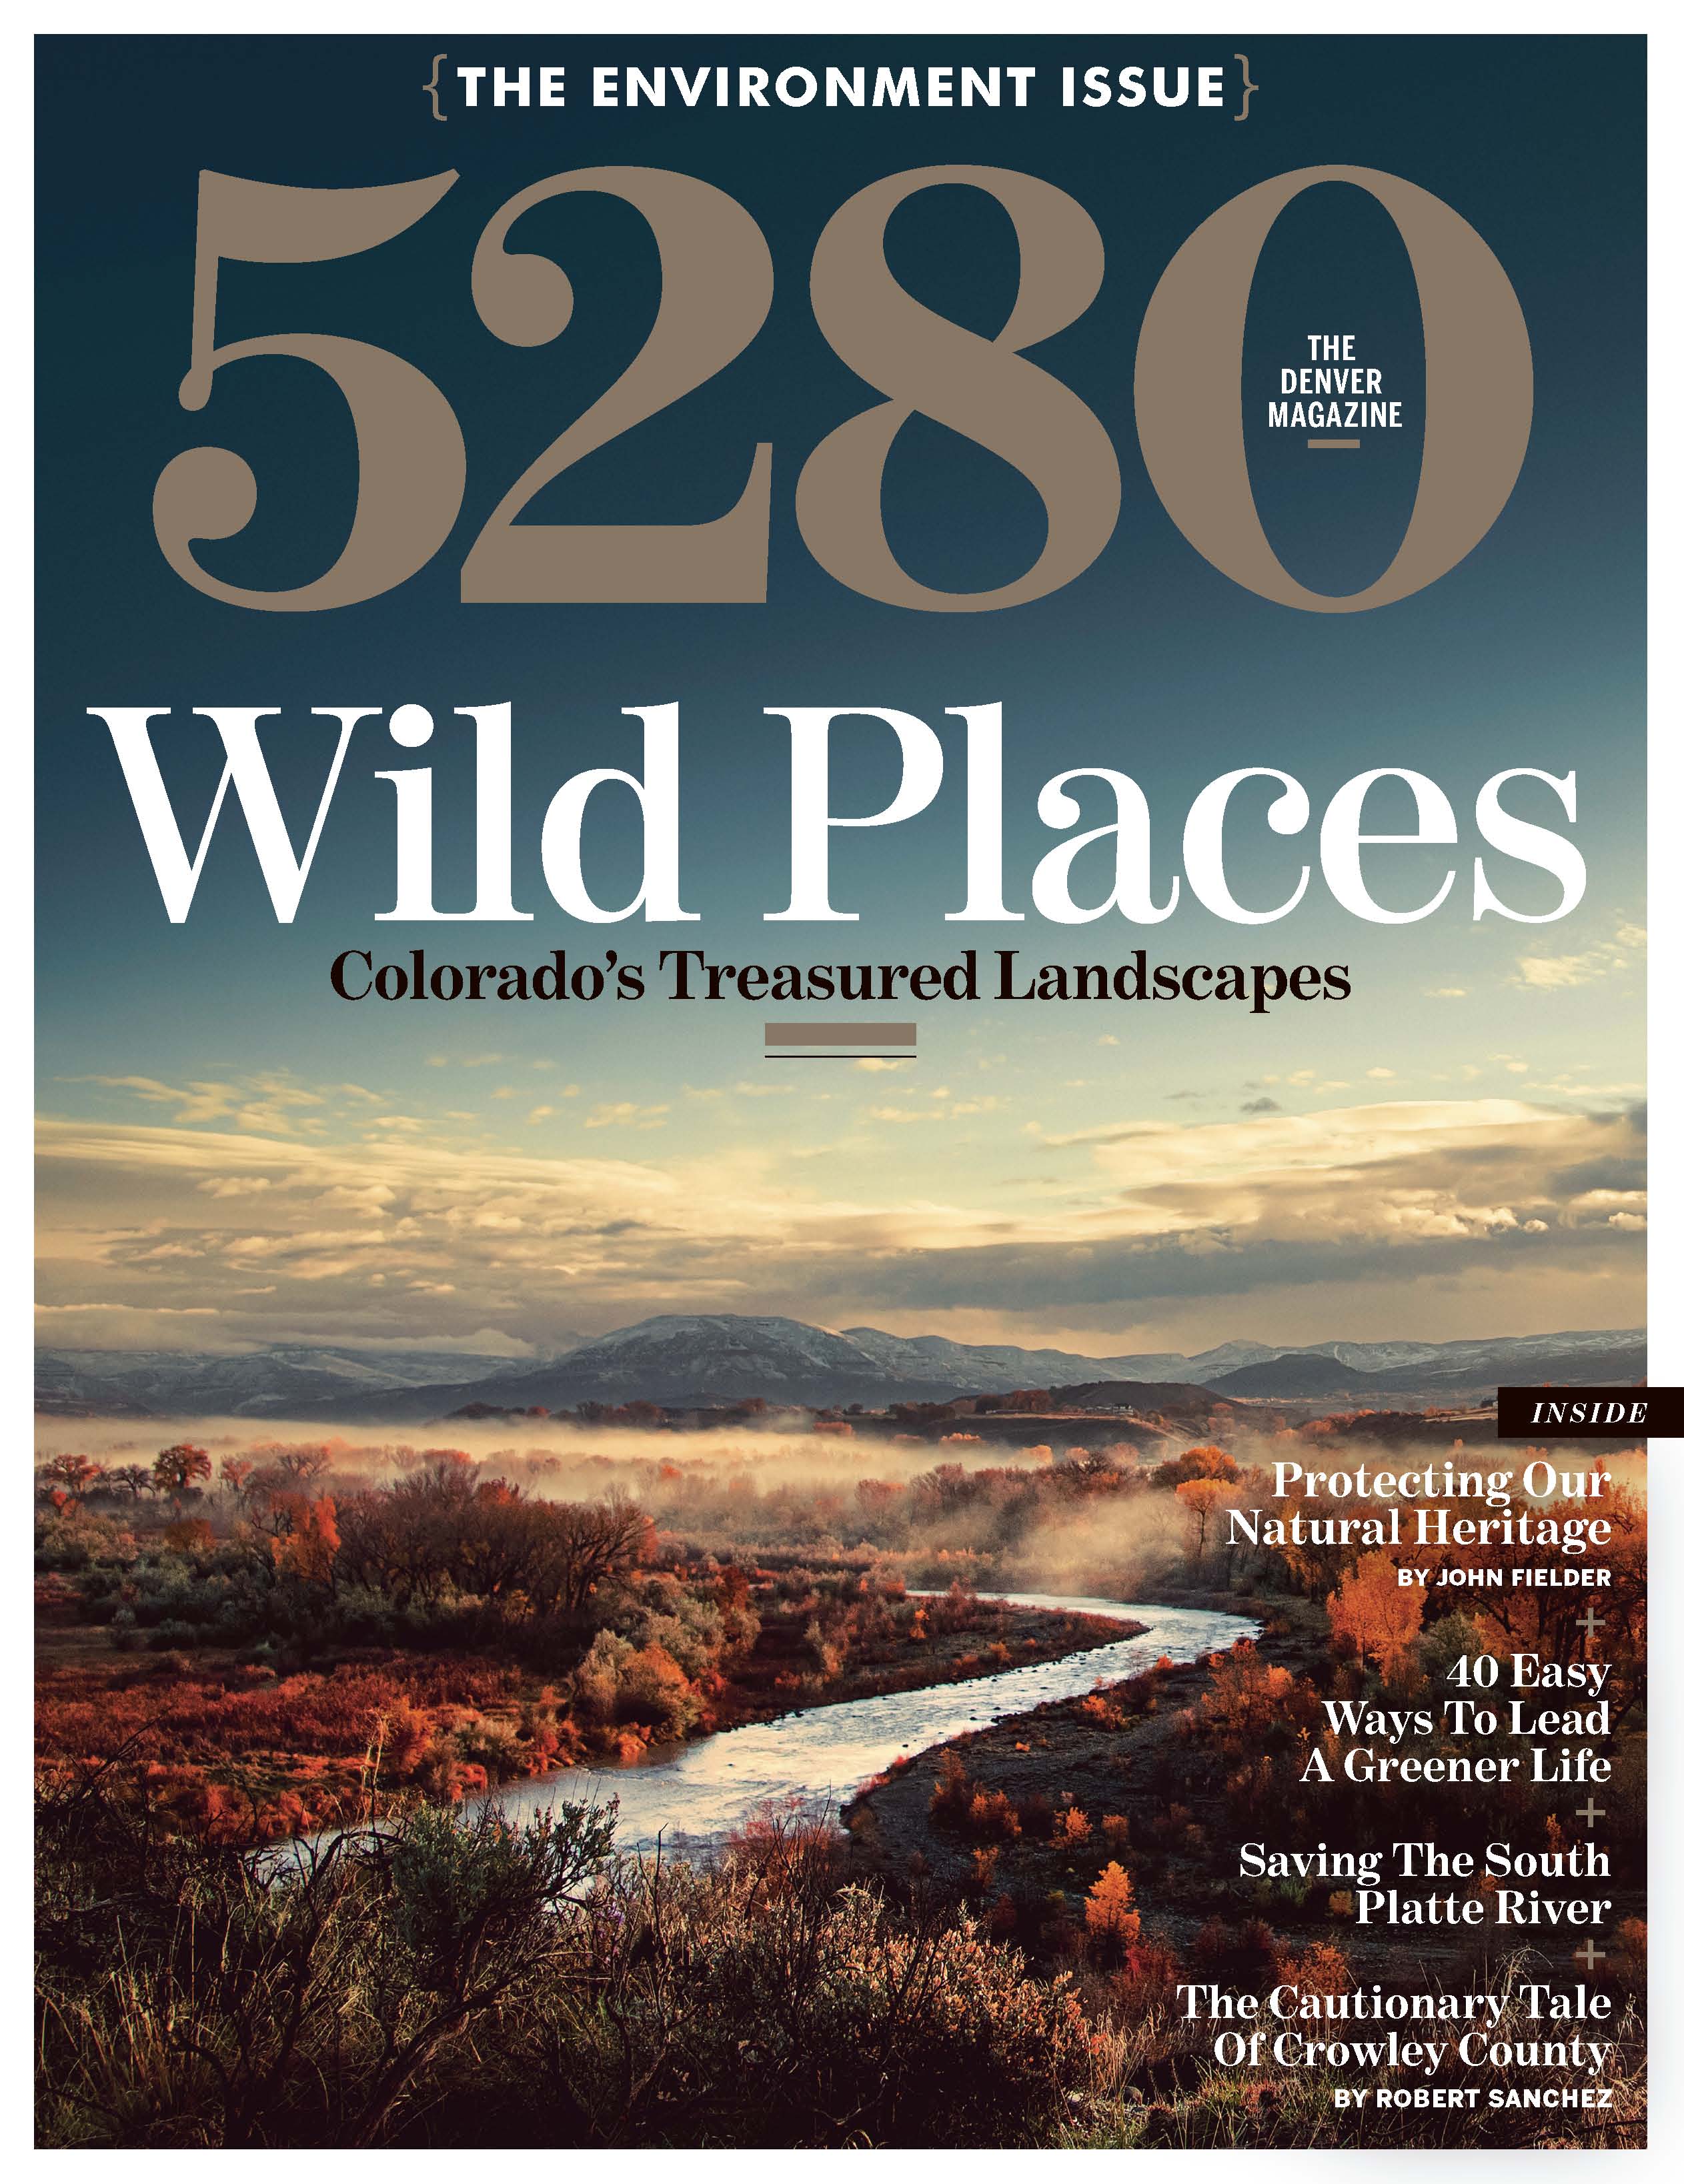 5280-December 2014, "Wild Places"